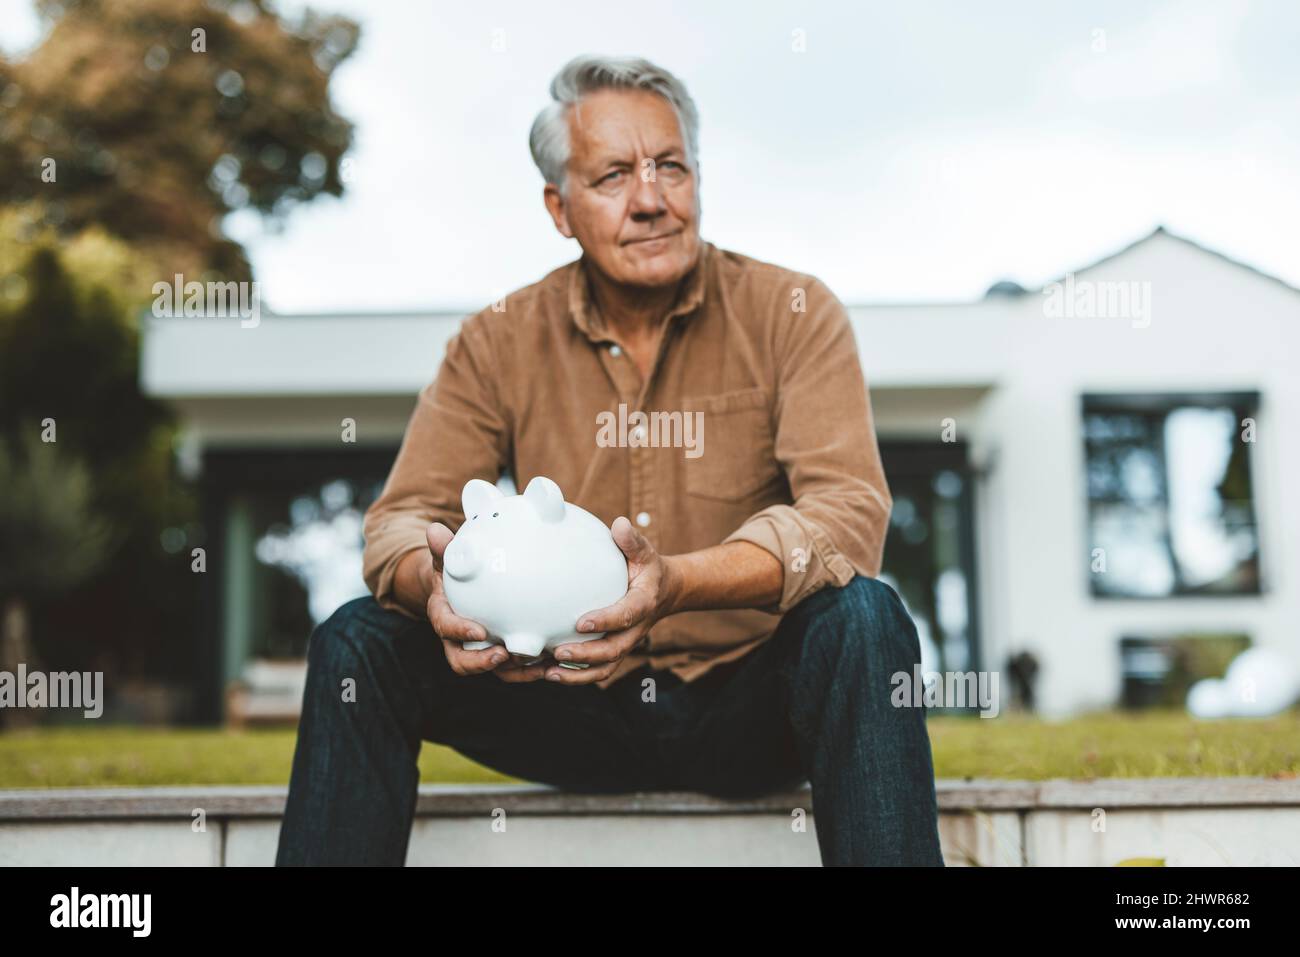 Senior man with white hair holding piggy bank at backyard Stock Photo